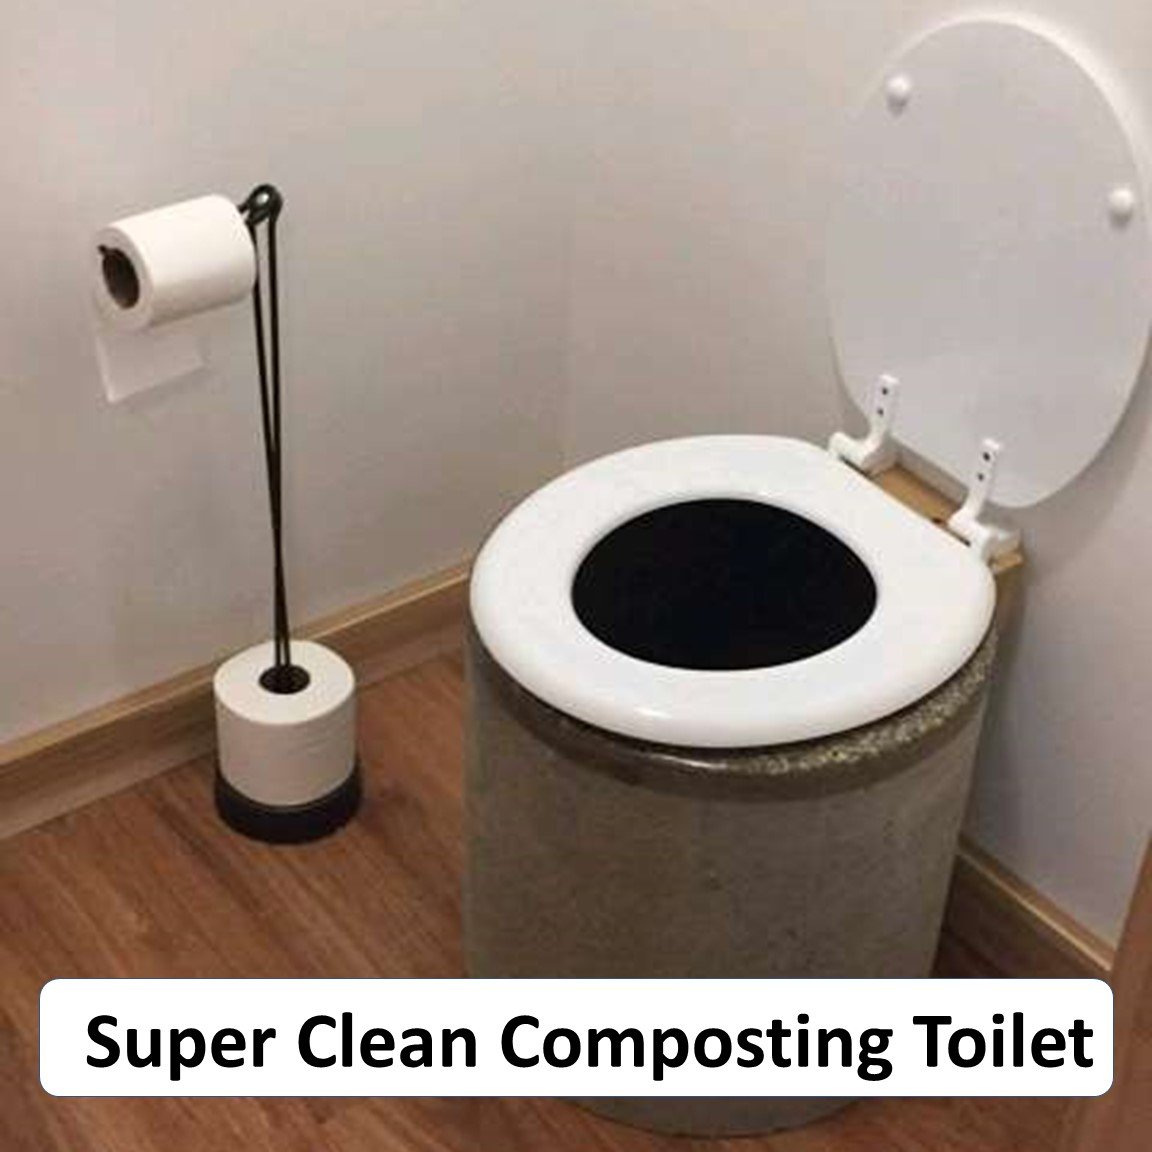 Super Clean Composting Toilet